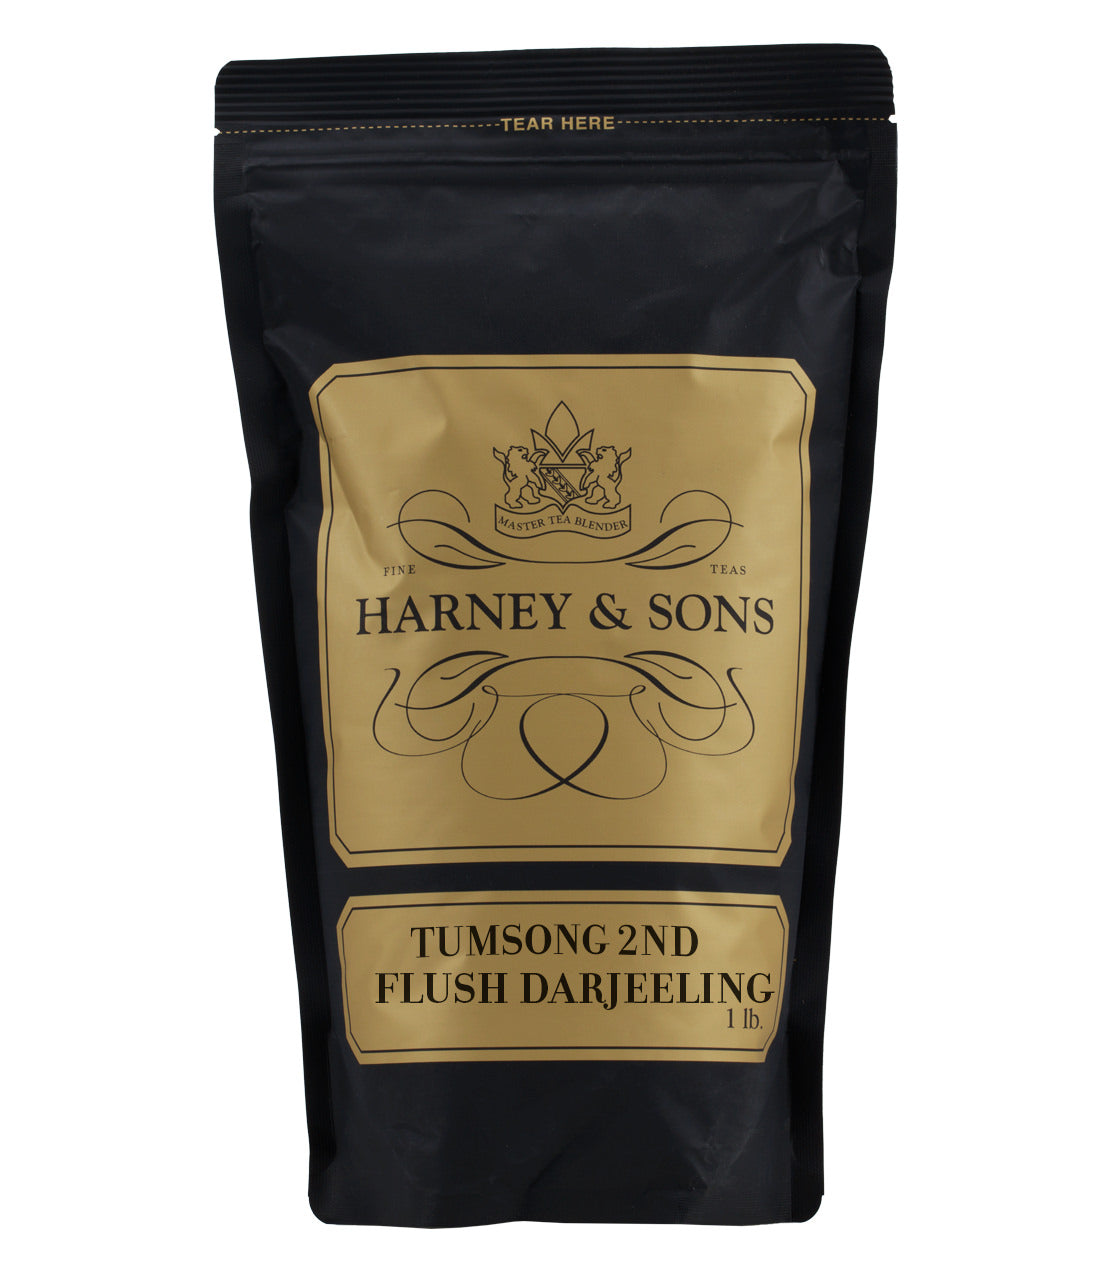 Tumsong 2nd Flush Darjeeling - Loose 1 lb Bag - Harney & Sons Fine Teas